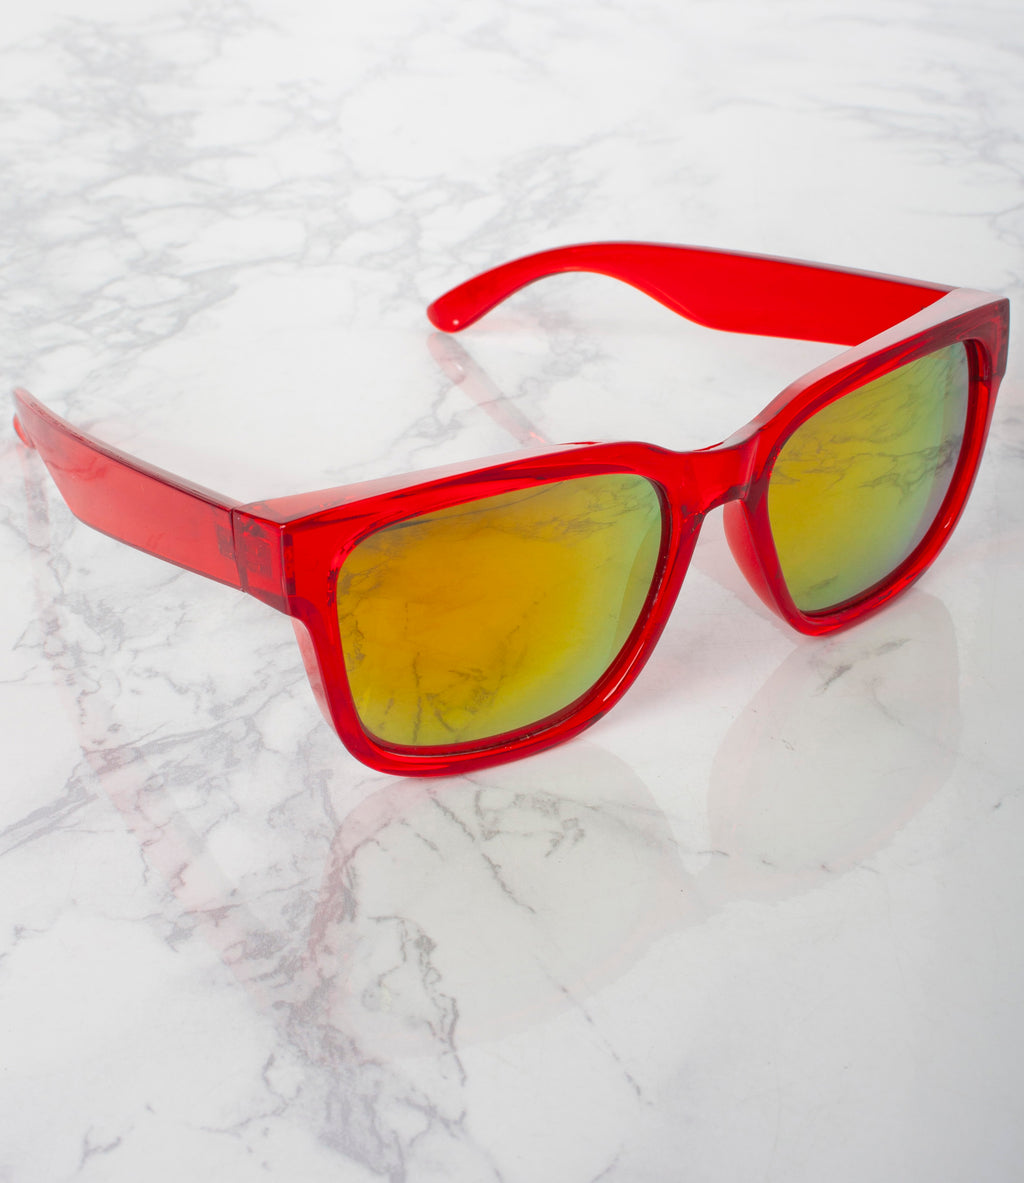 Wholesale Sunglasses | Wholesale Fashion Sunglasses in Bulk